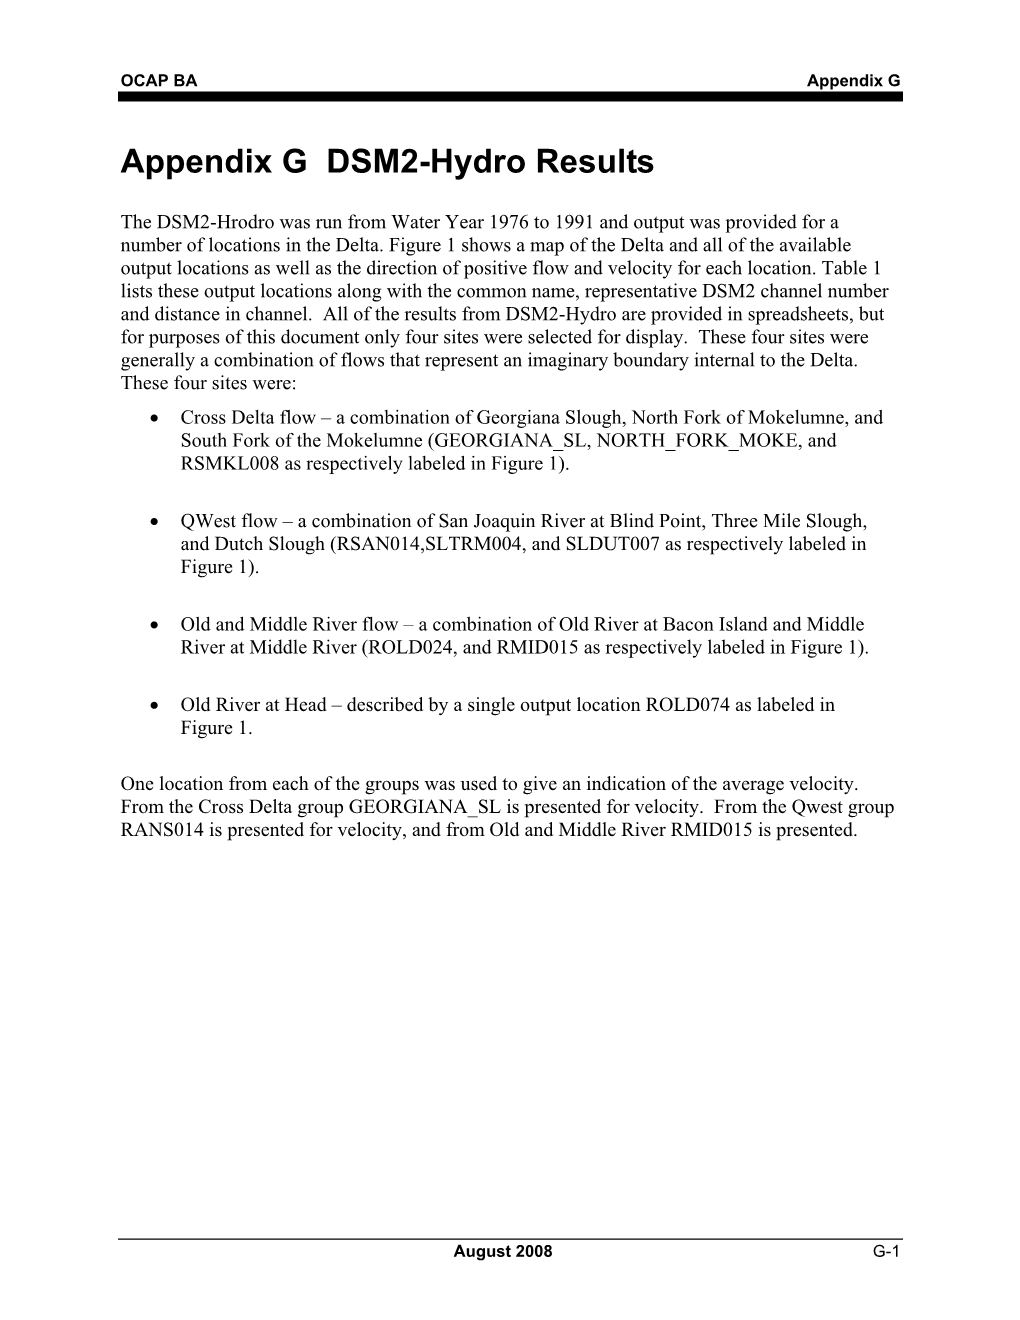 Appendix G DSM2-Hydro Results